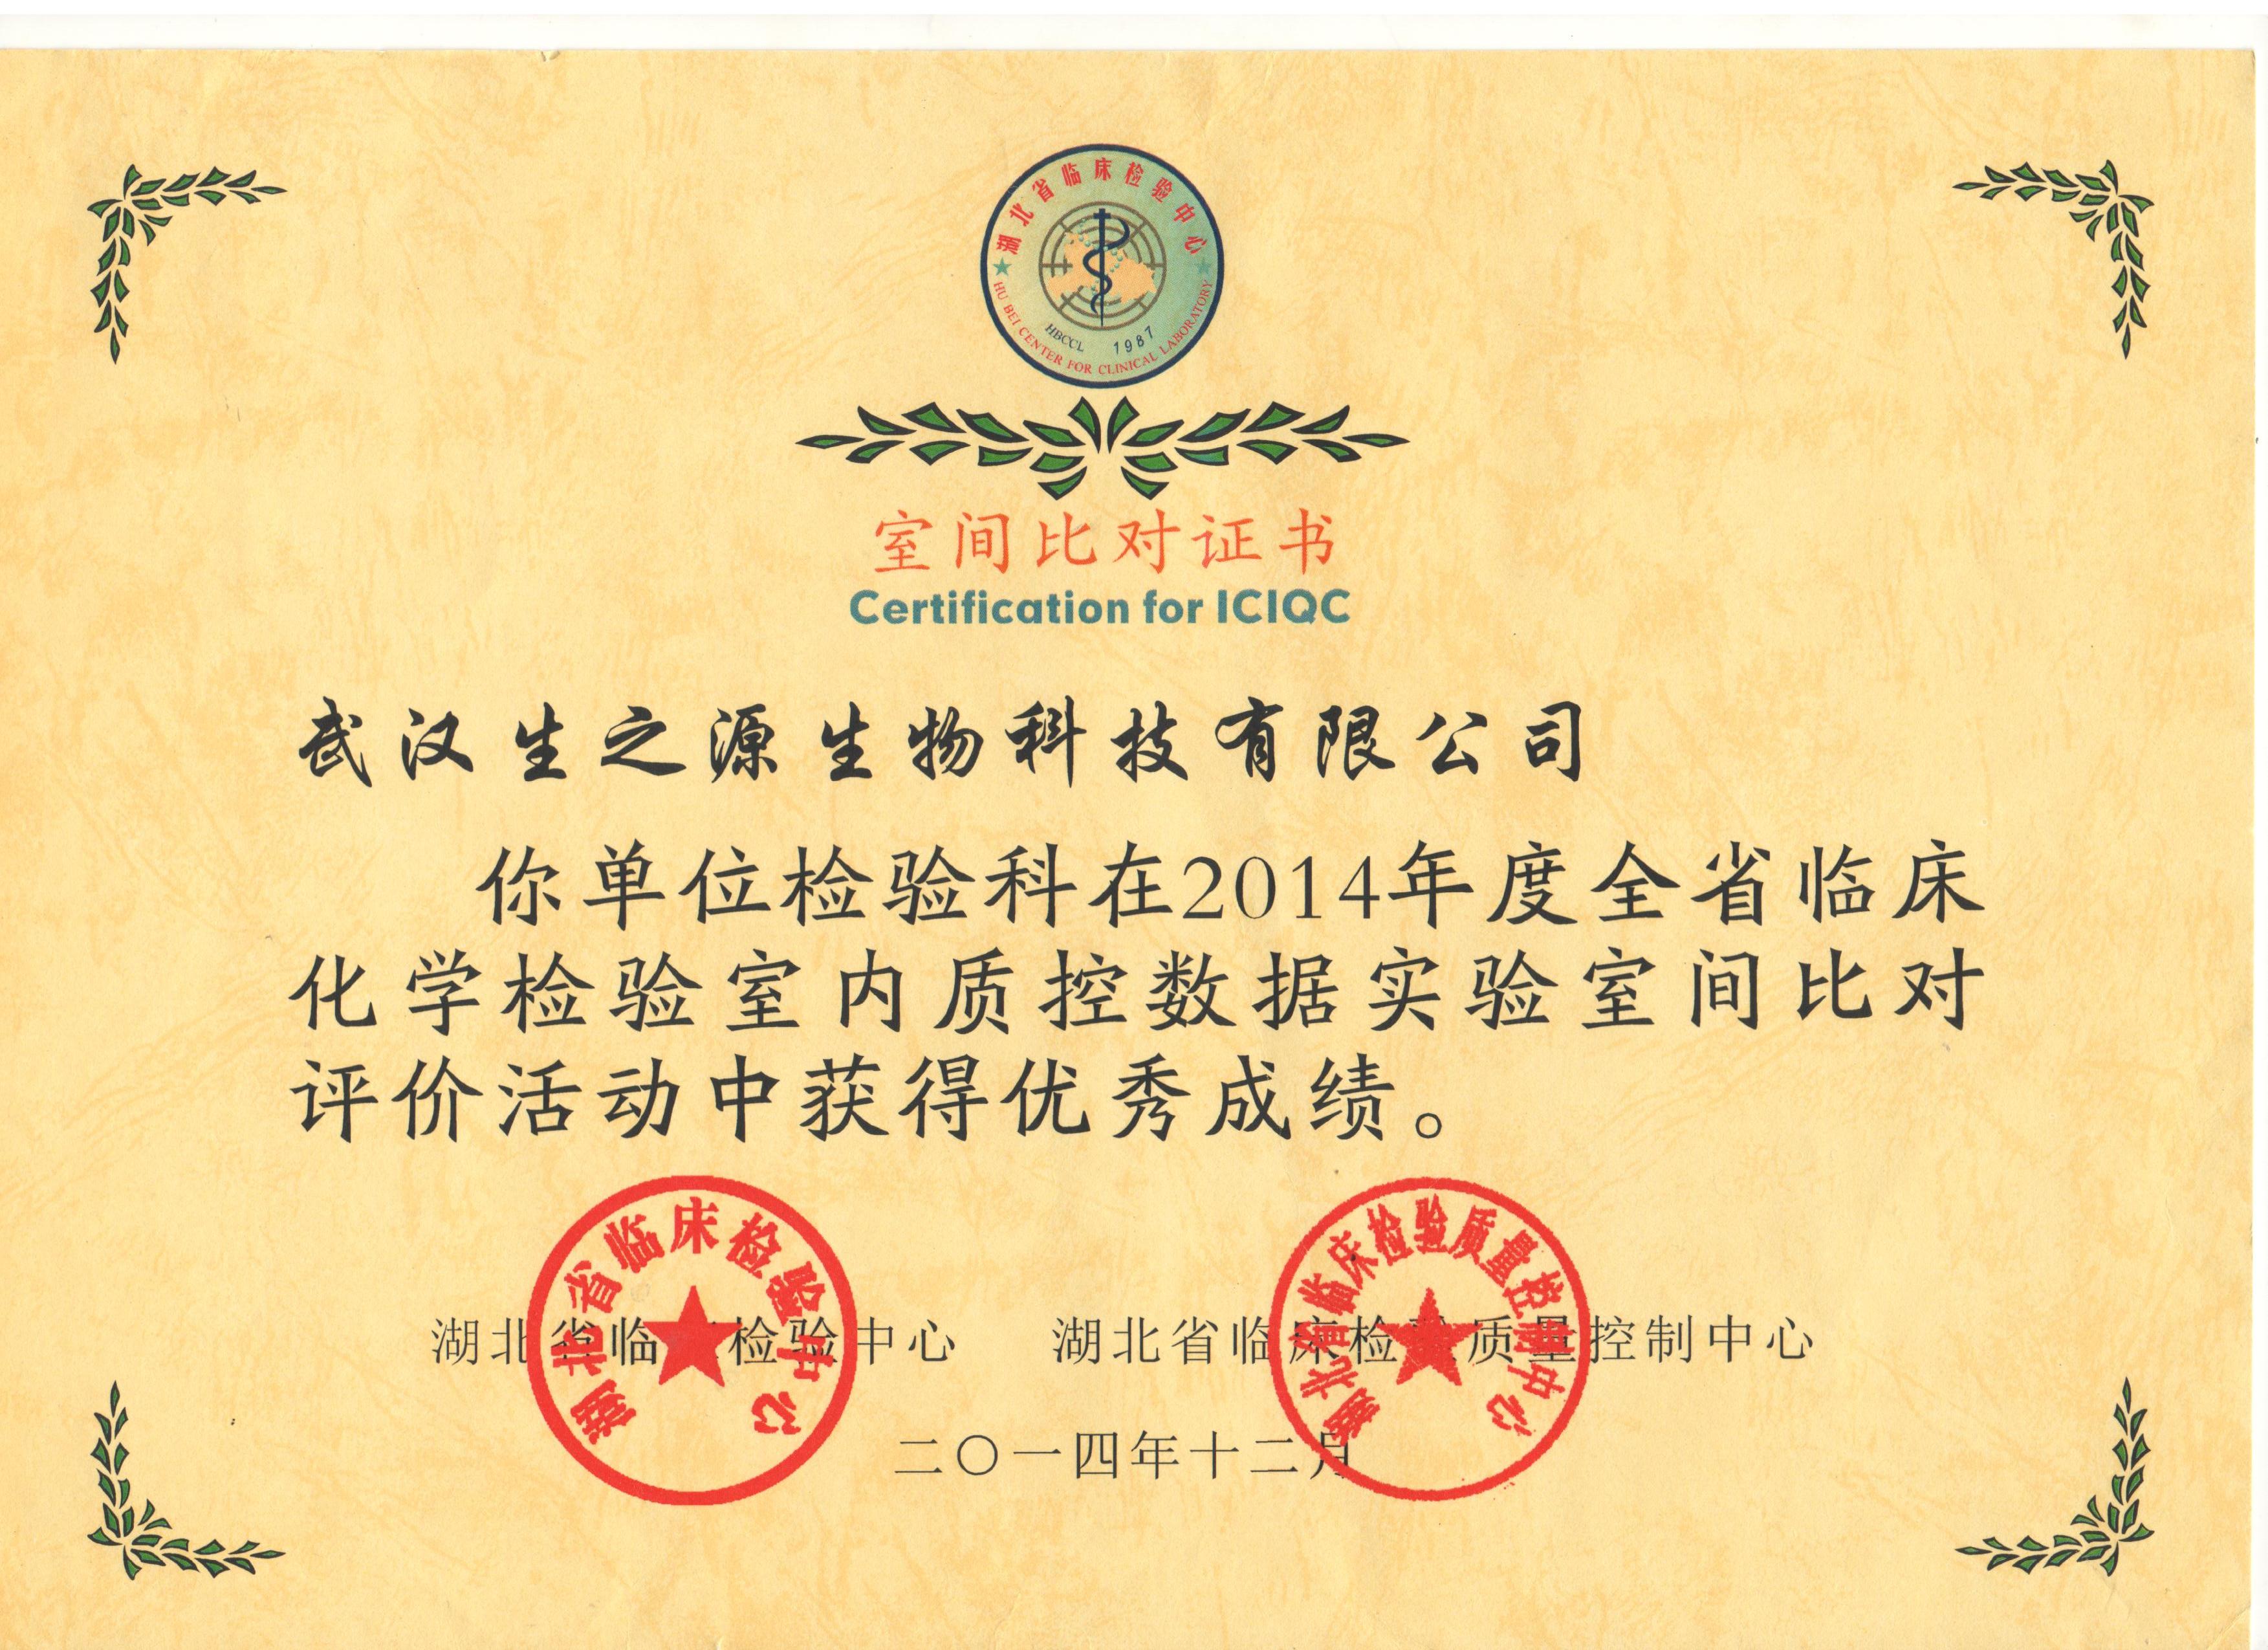 Certificate of external quality assessment